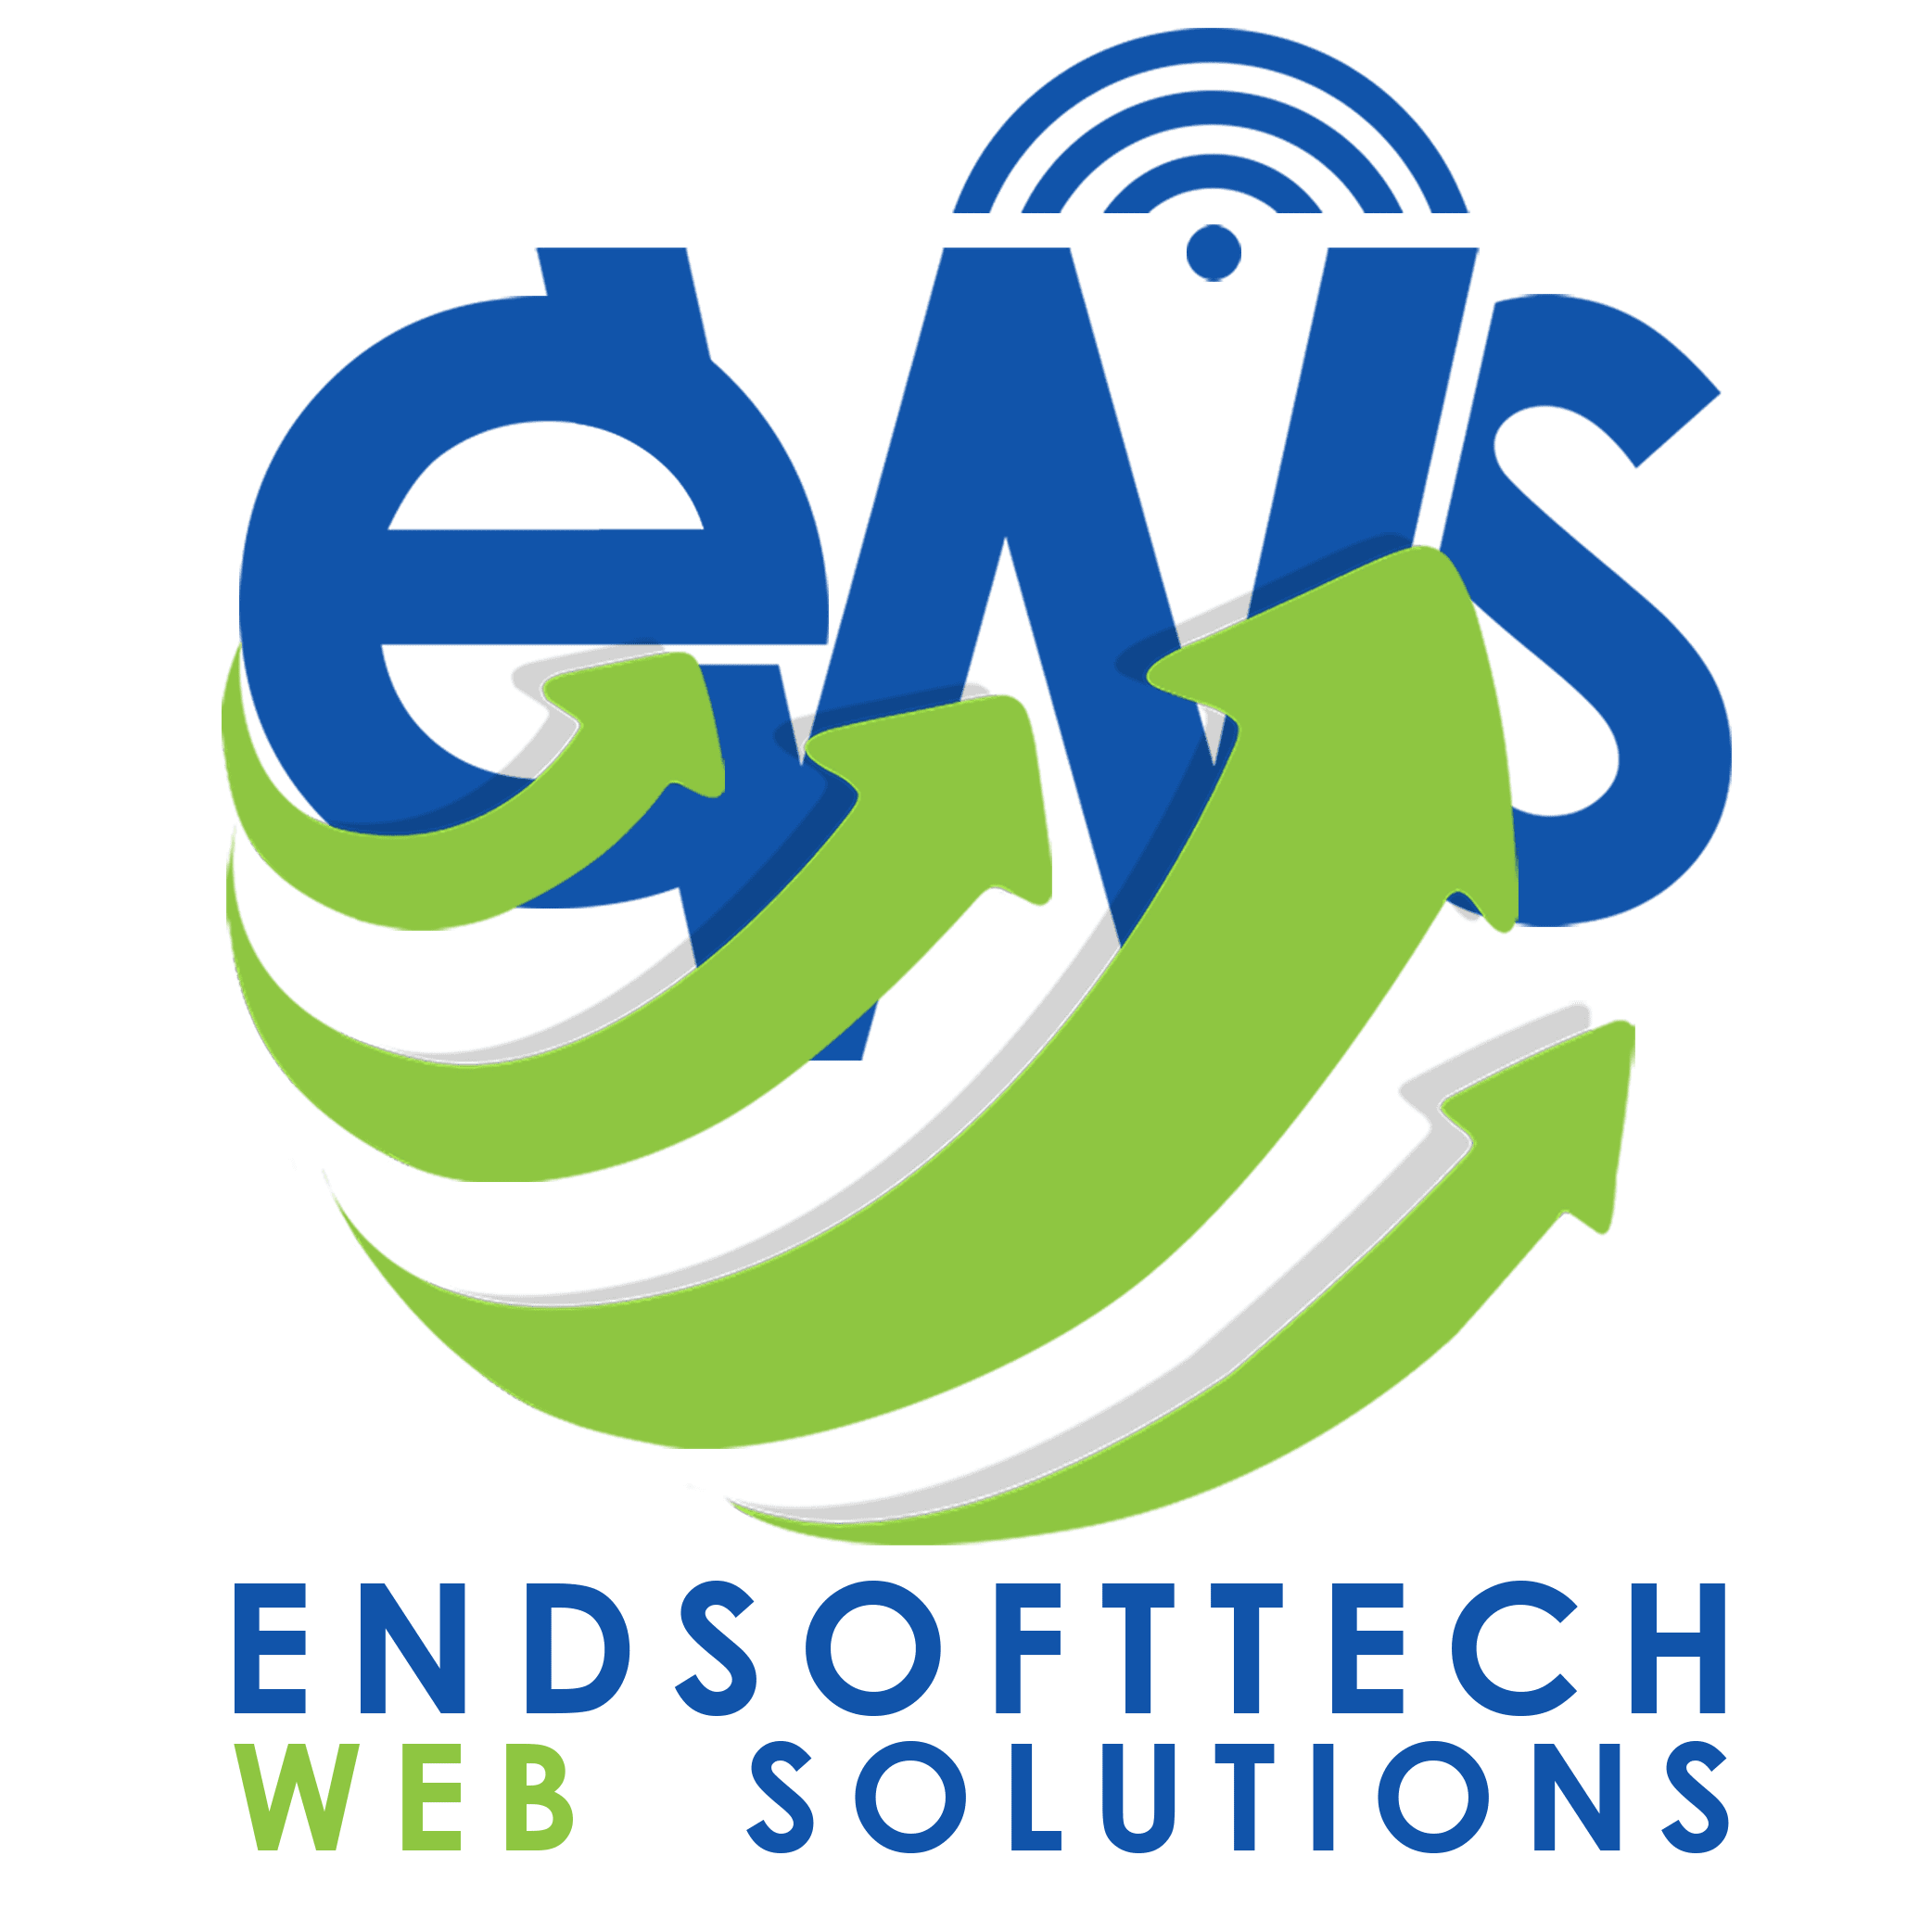 Endsofttech Web Solutions logo